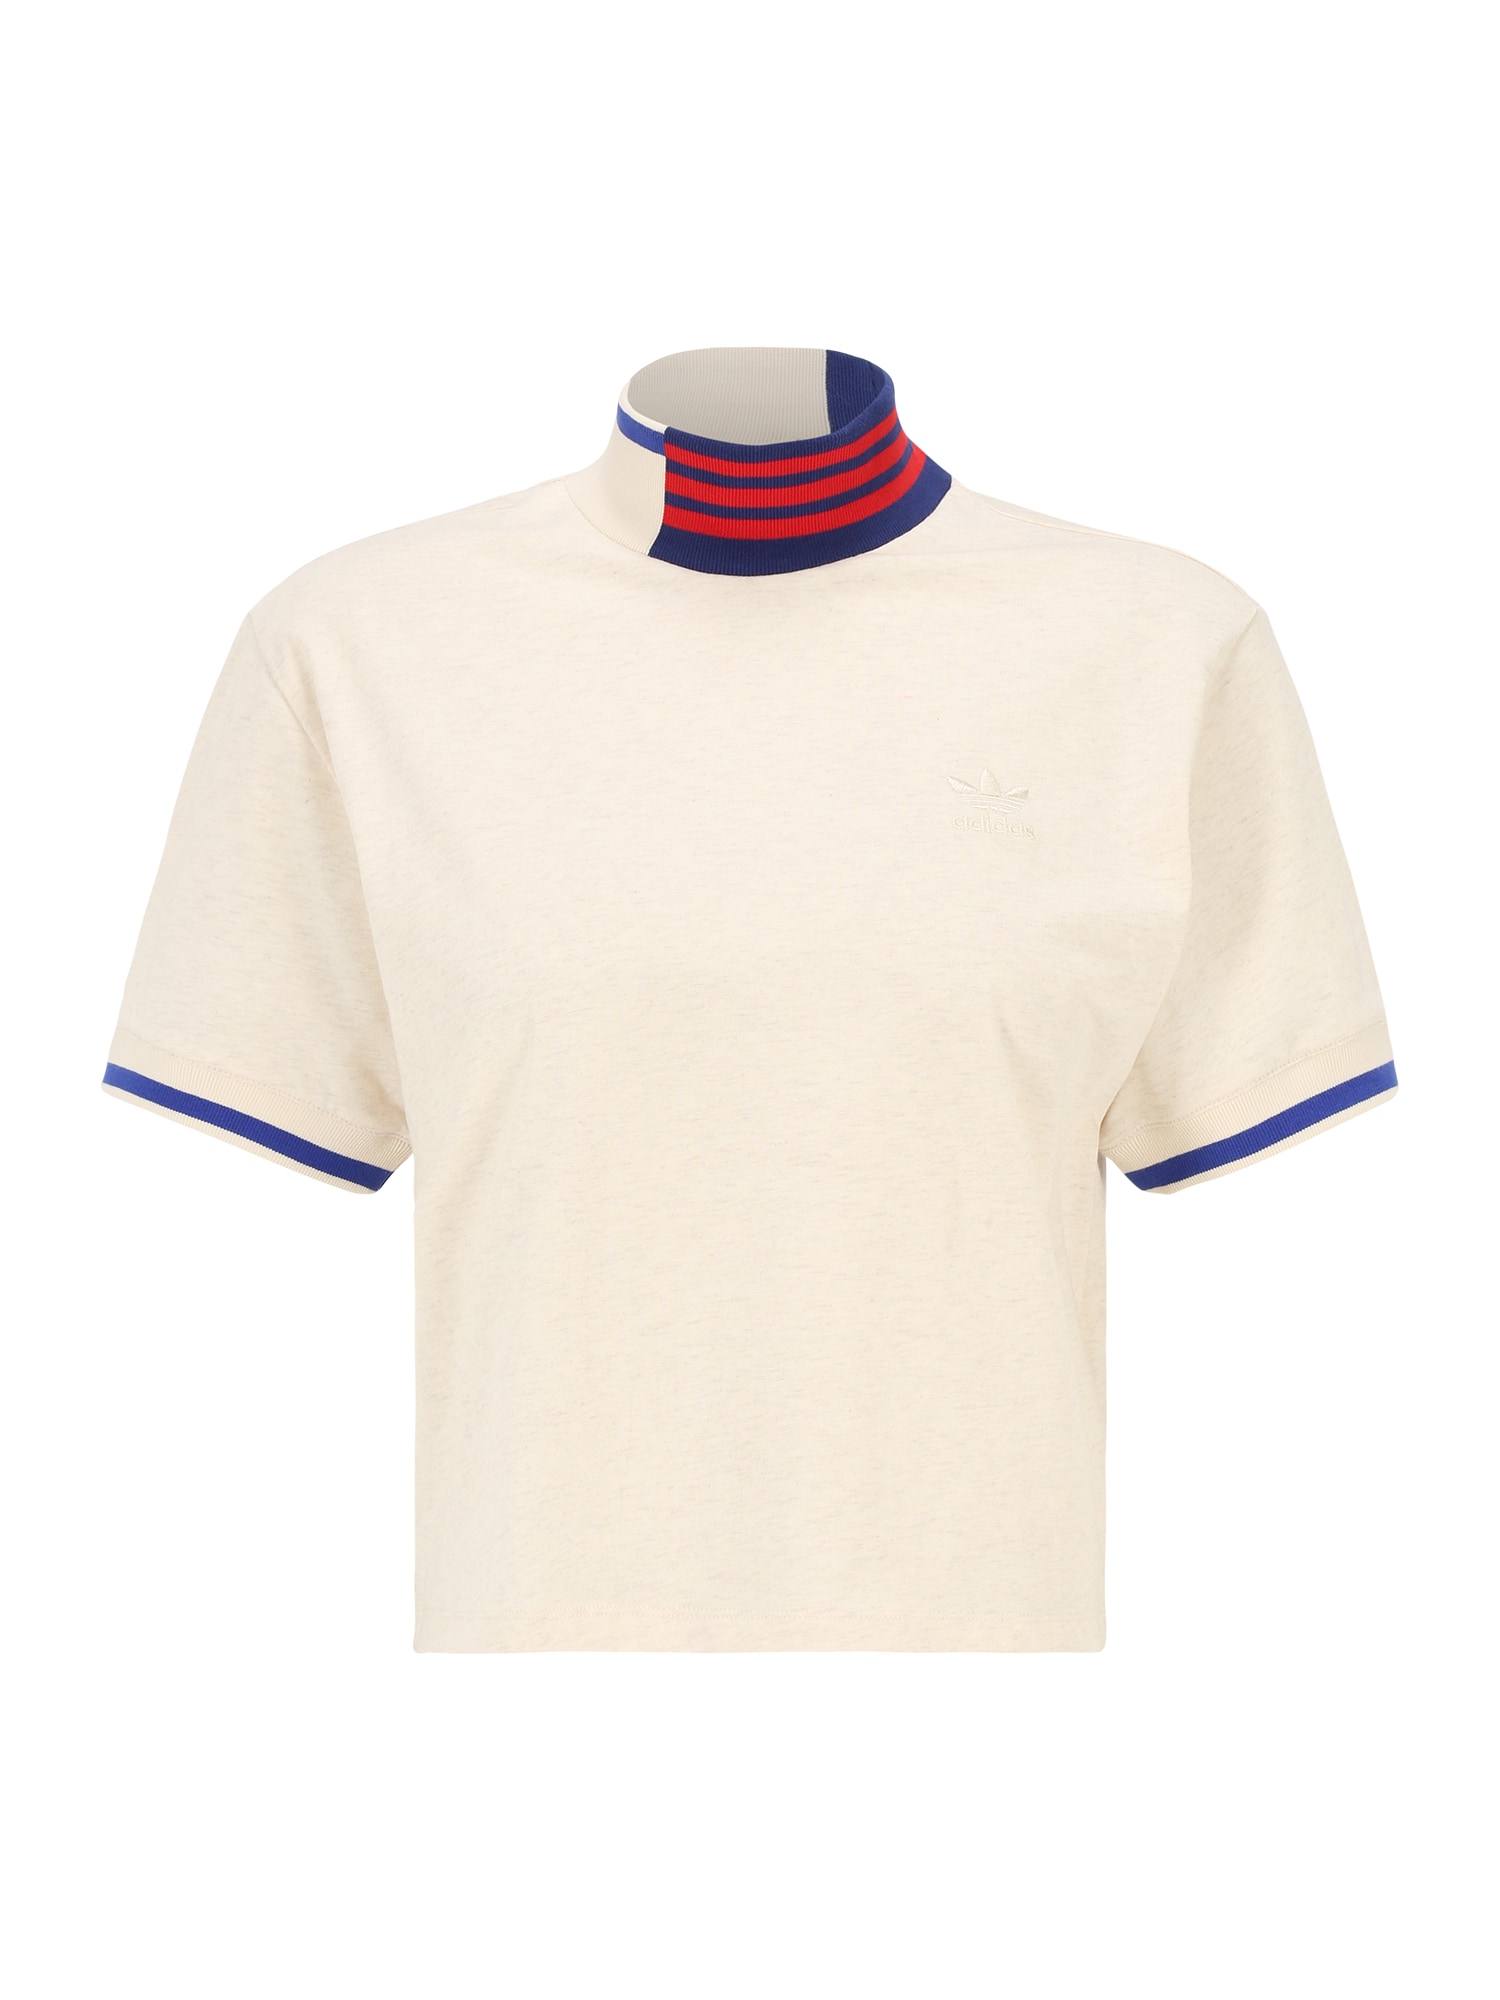 adidas Originals ADIDAS ORIGINALS T-Shirt marine / rot / weiß